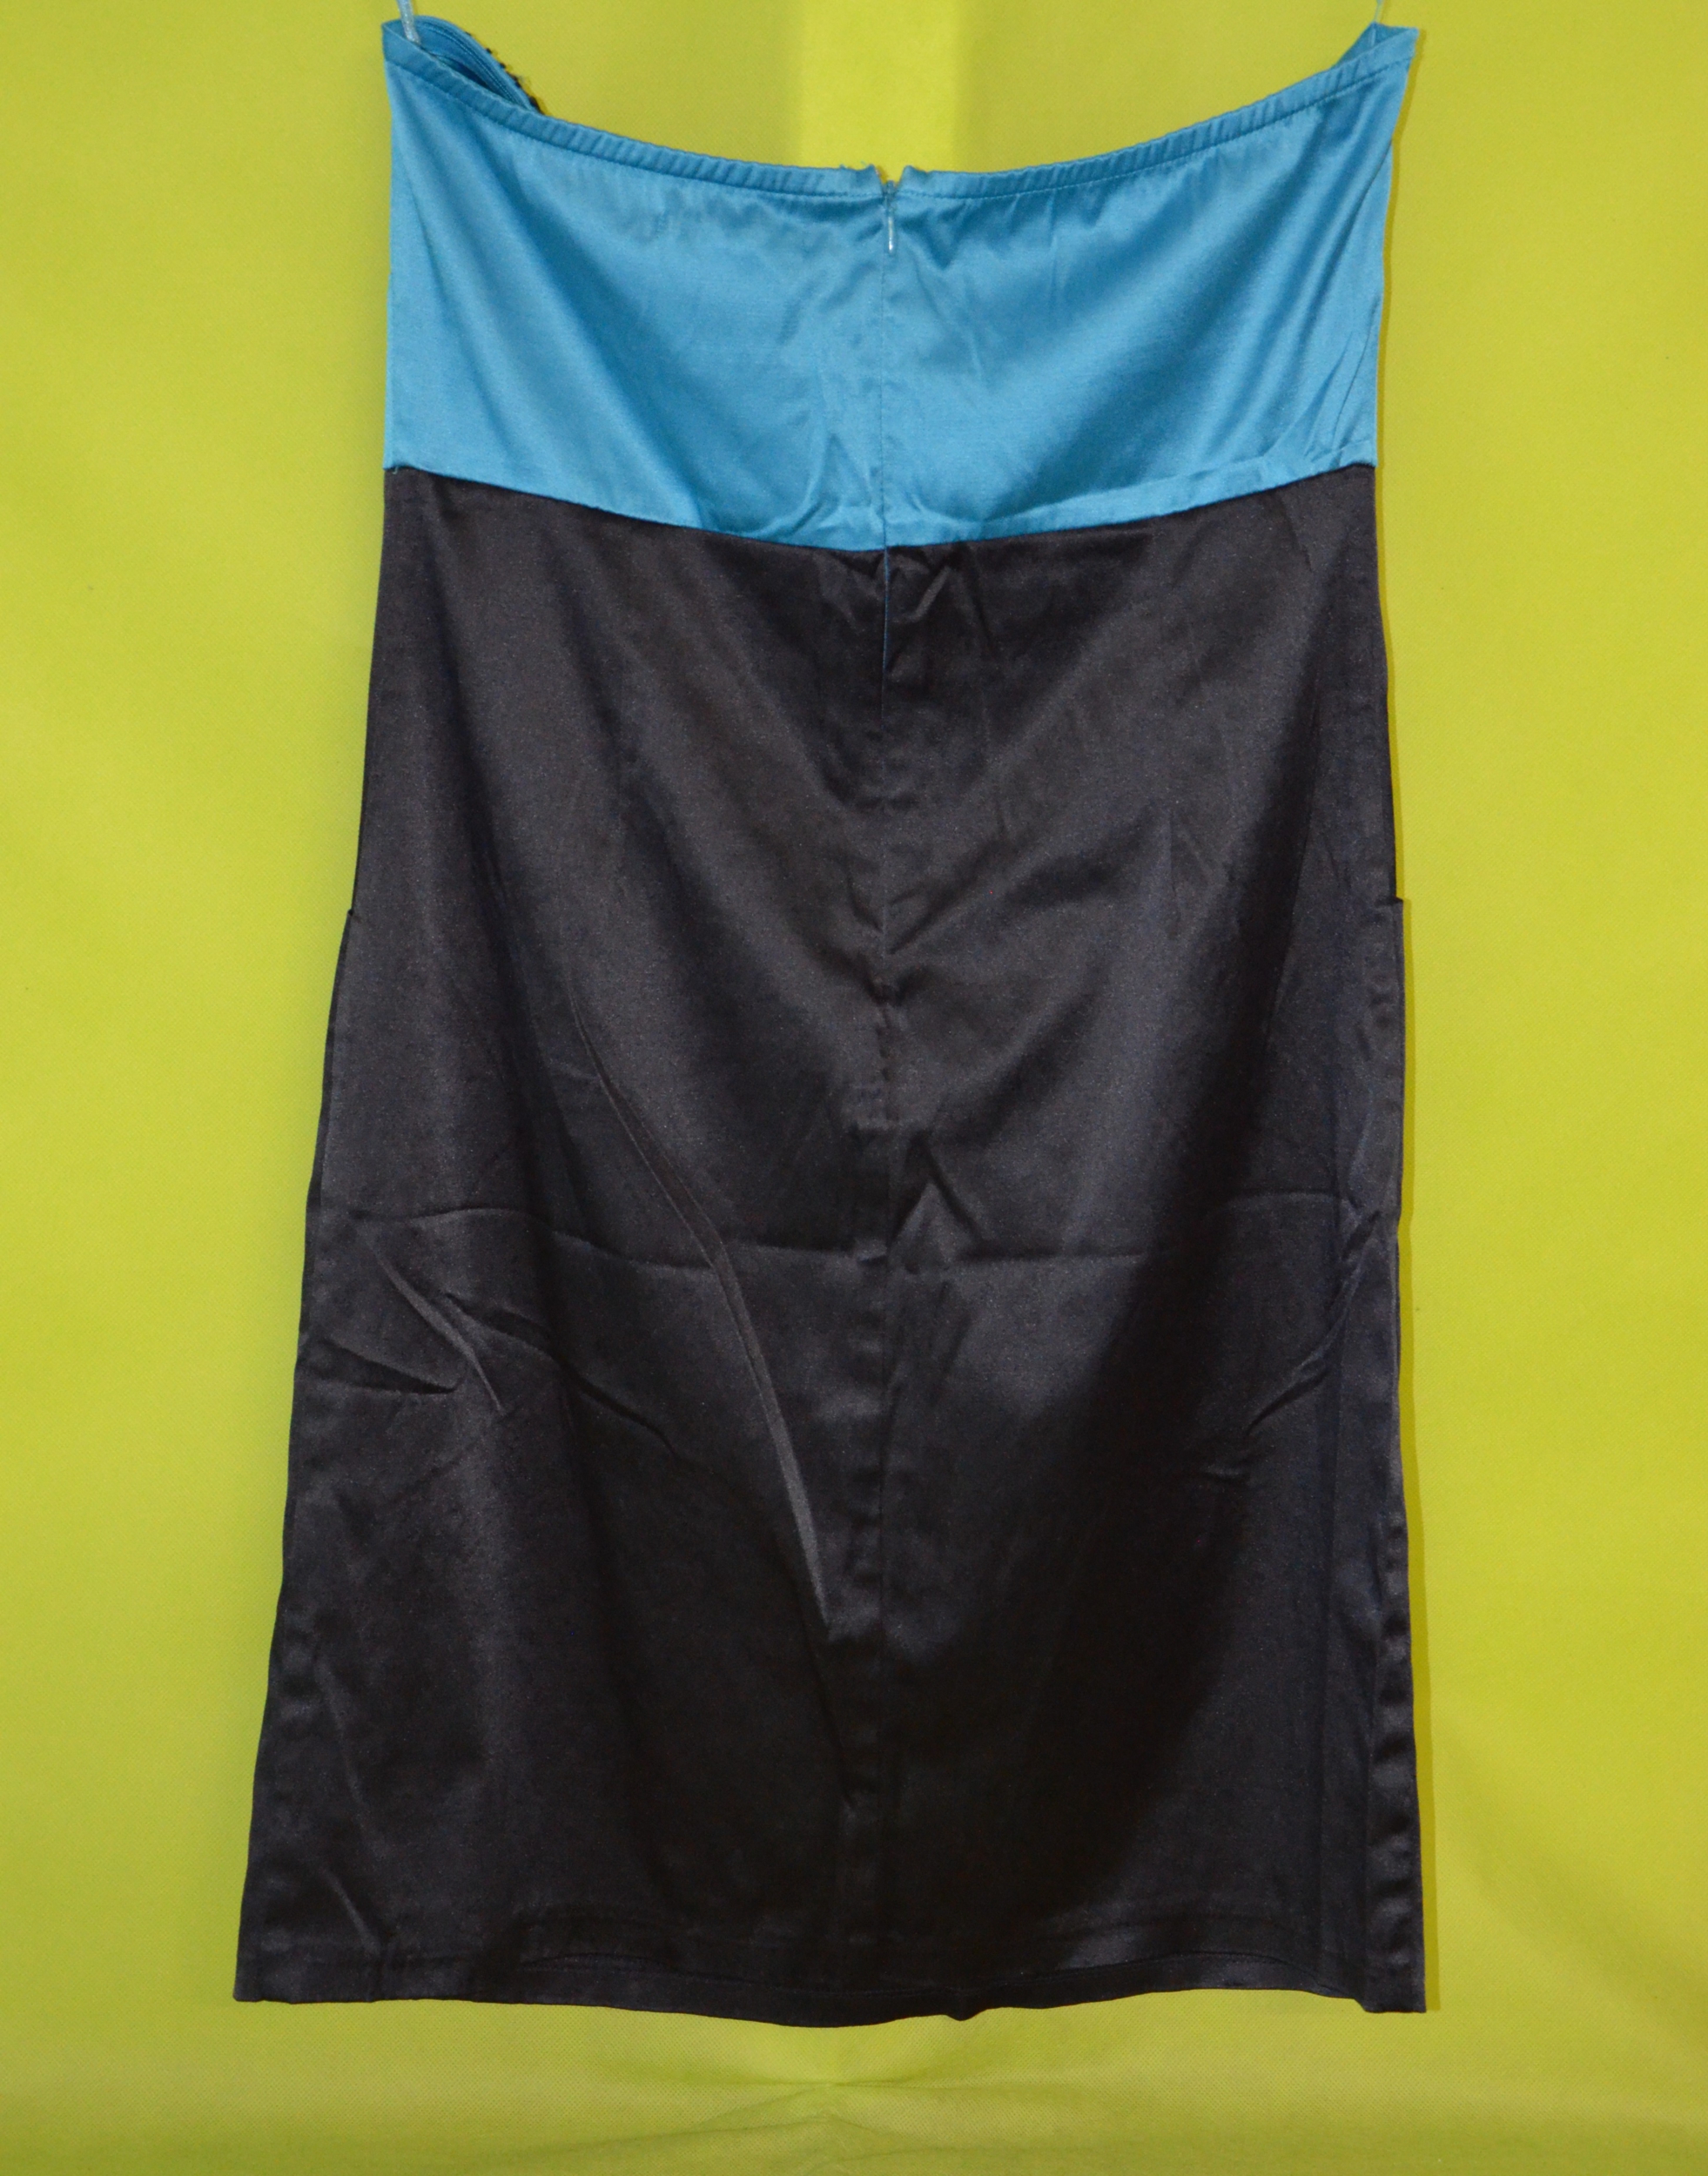 Friperie en ligne femme robe bustier 40 noir xanaka vetement occasion femme